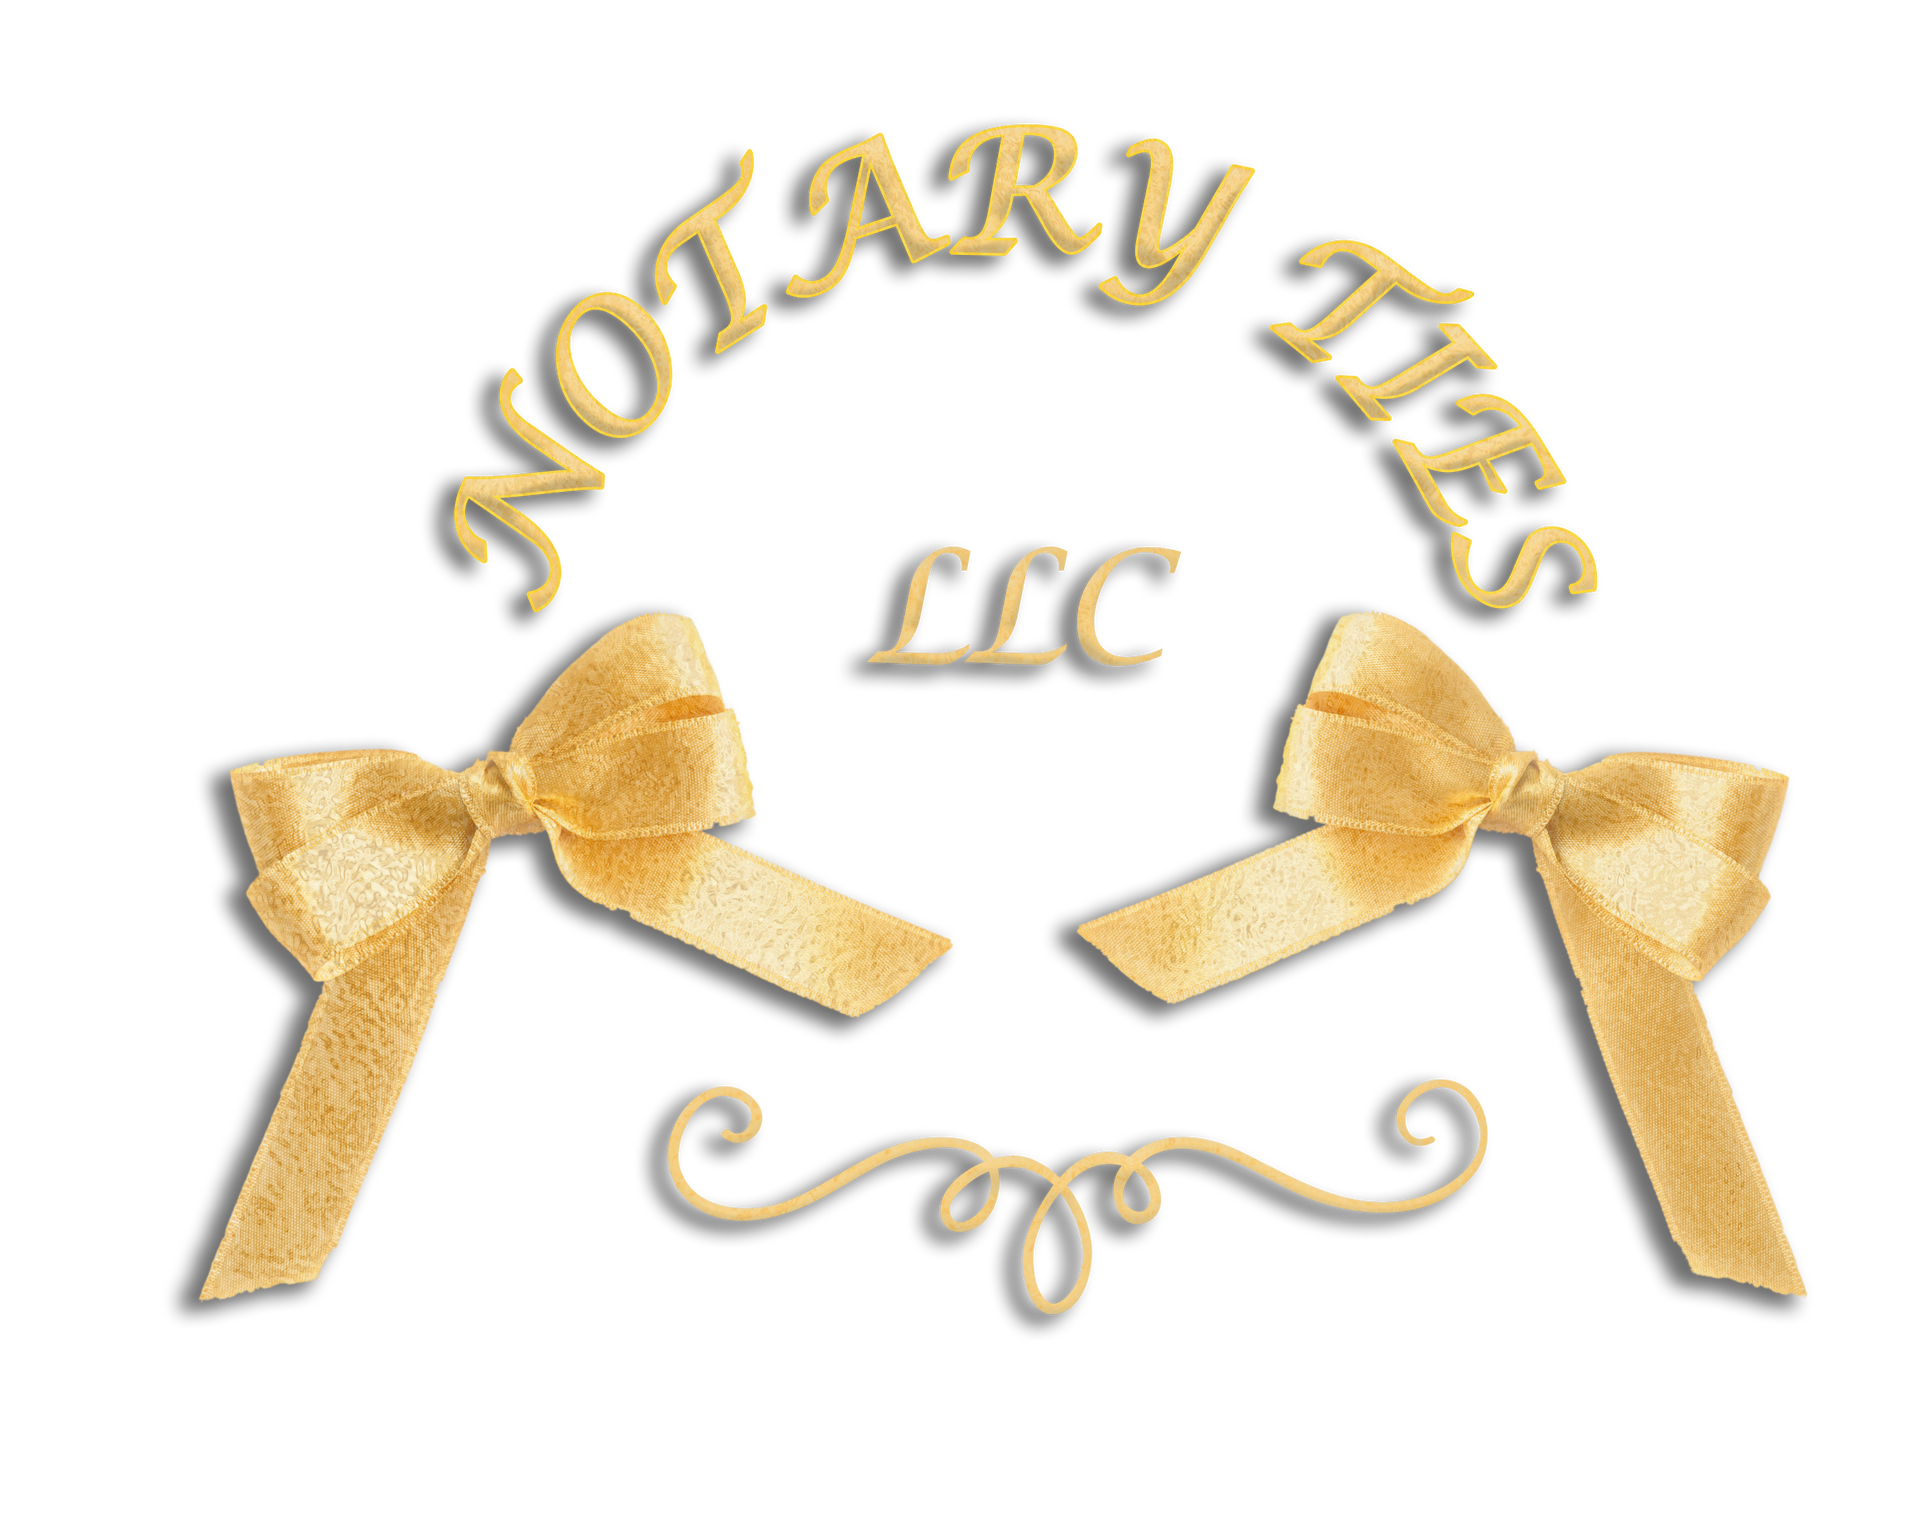 Notary Ties LLC